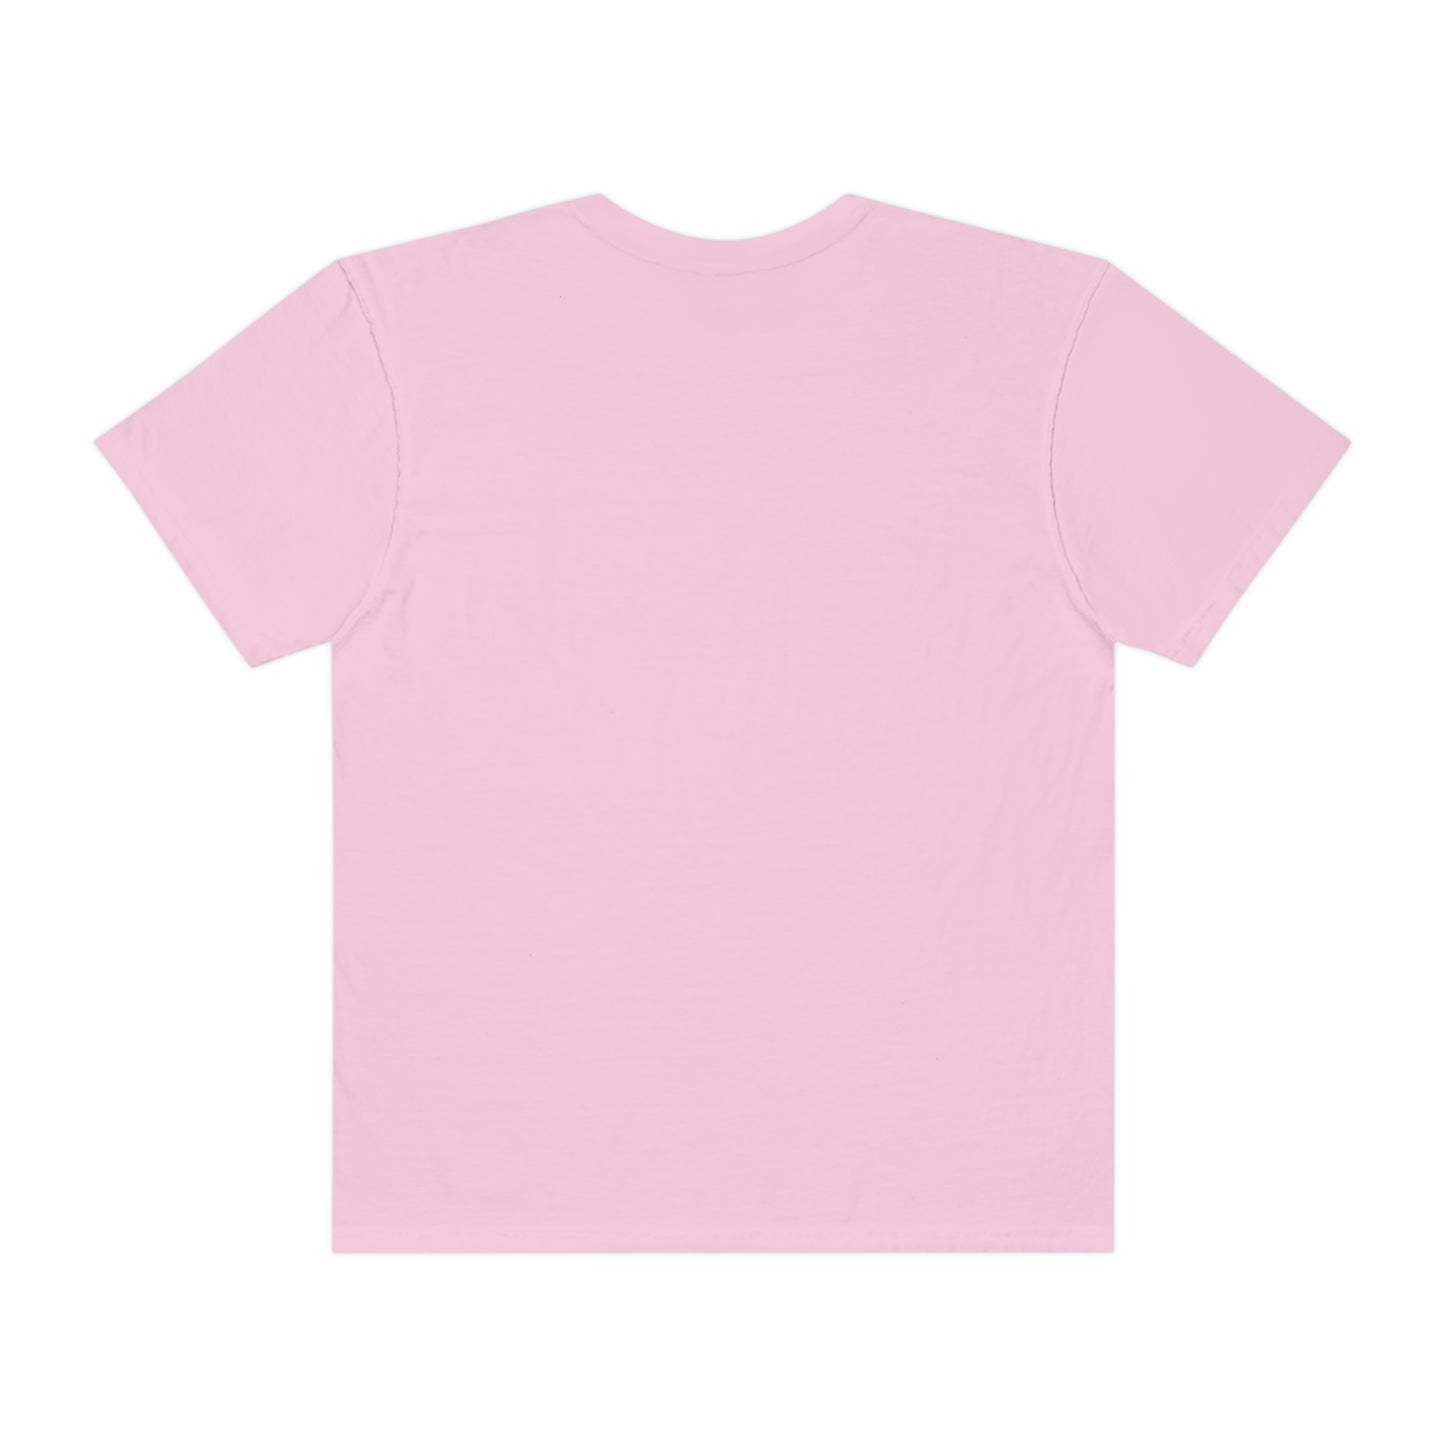 Official "ATX" T-Shirt (Comfort Colors)